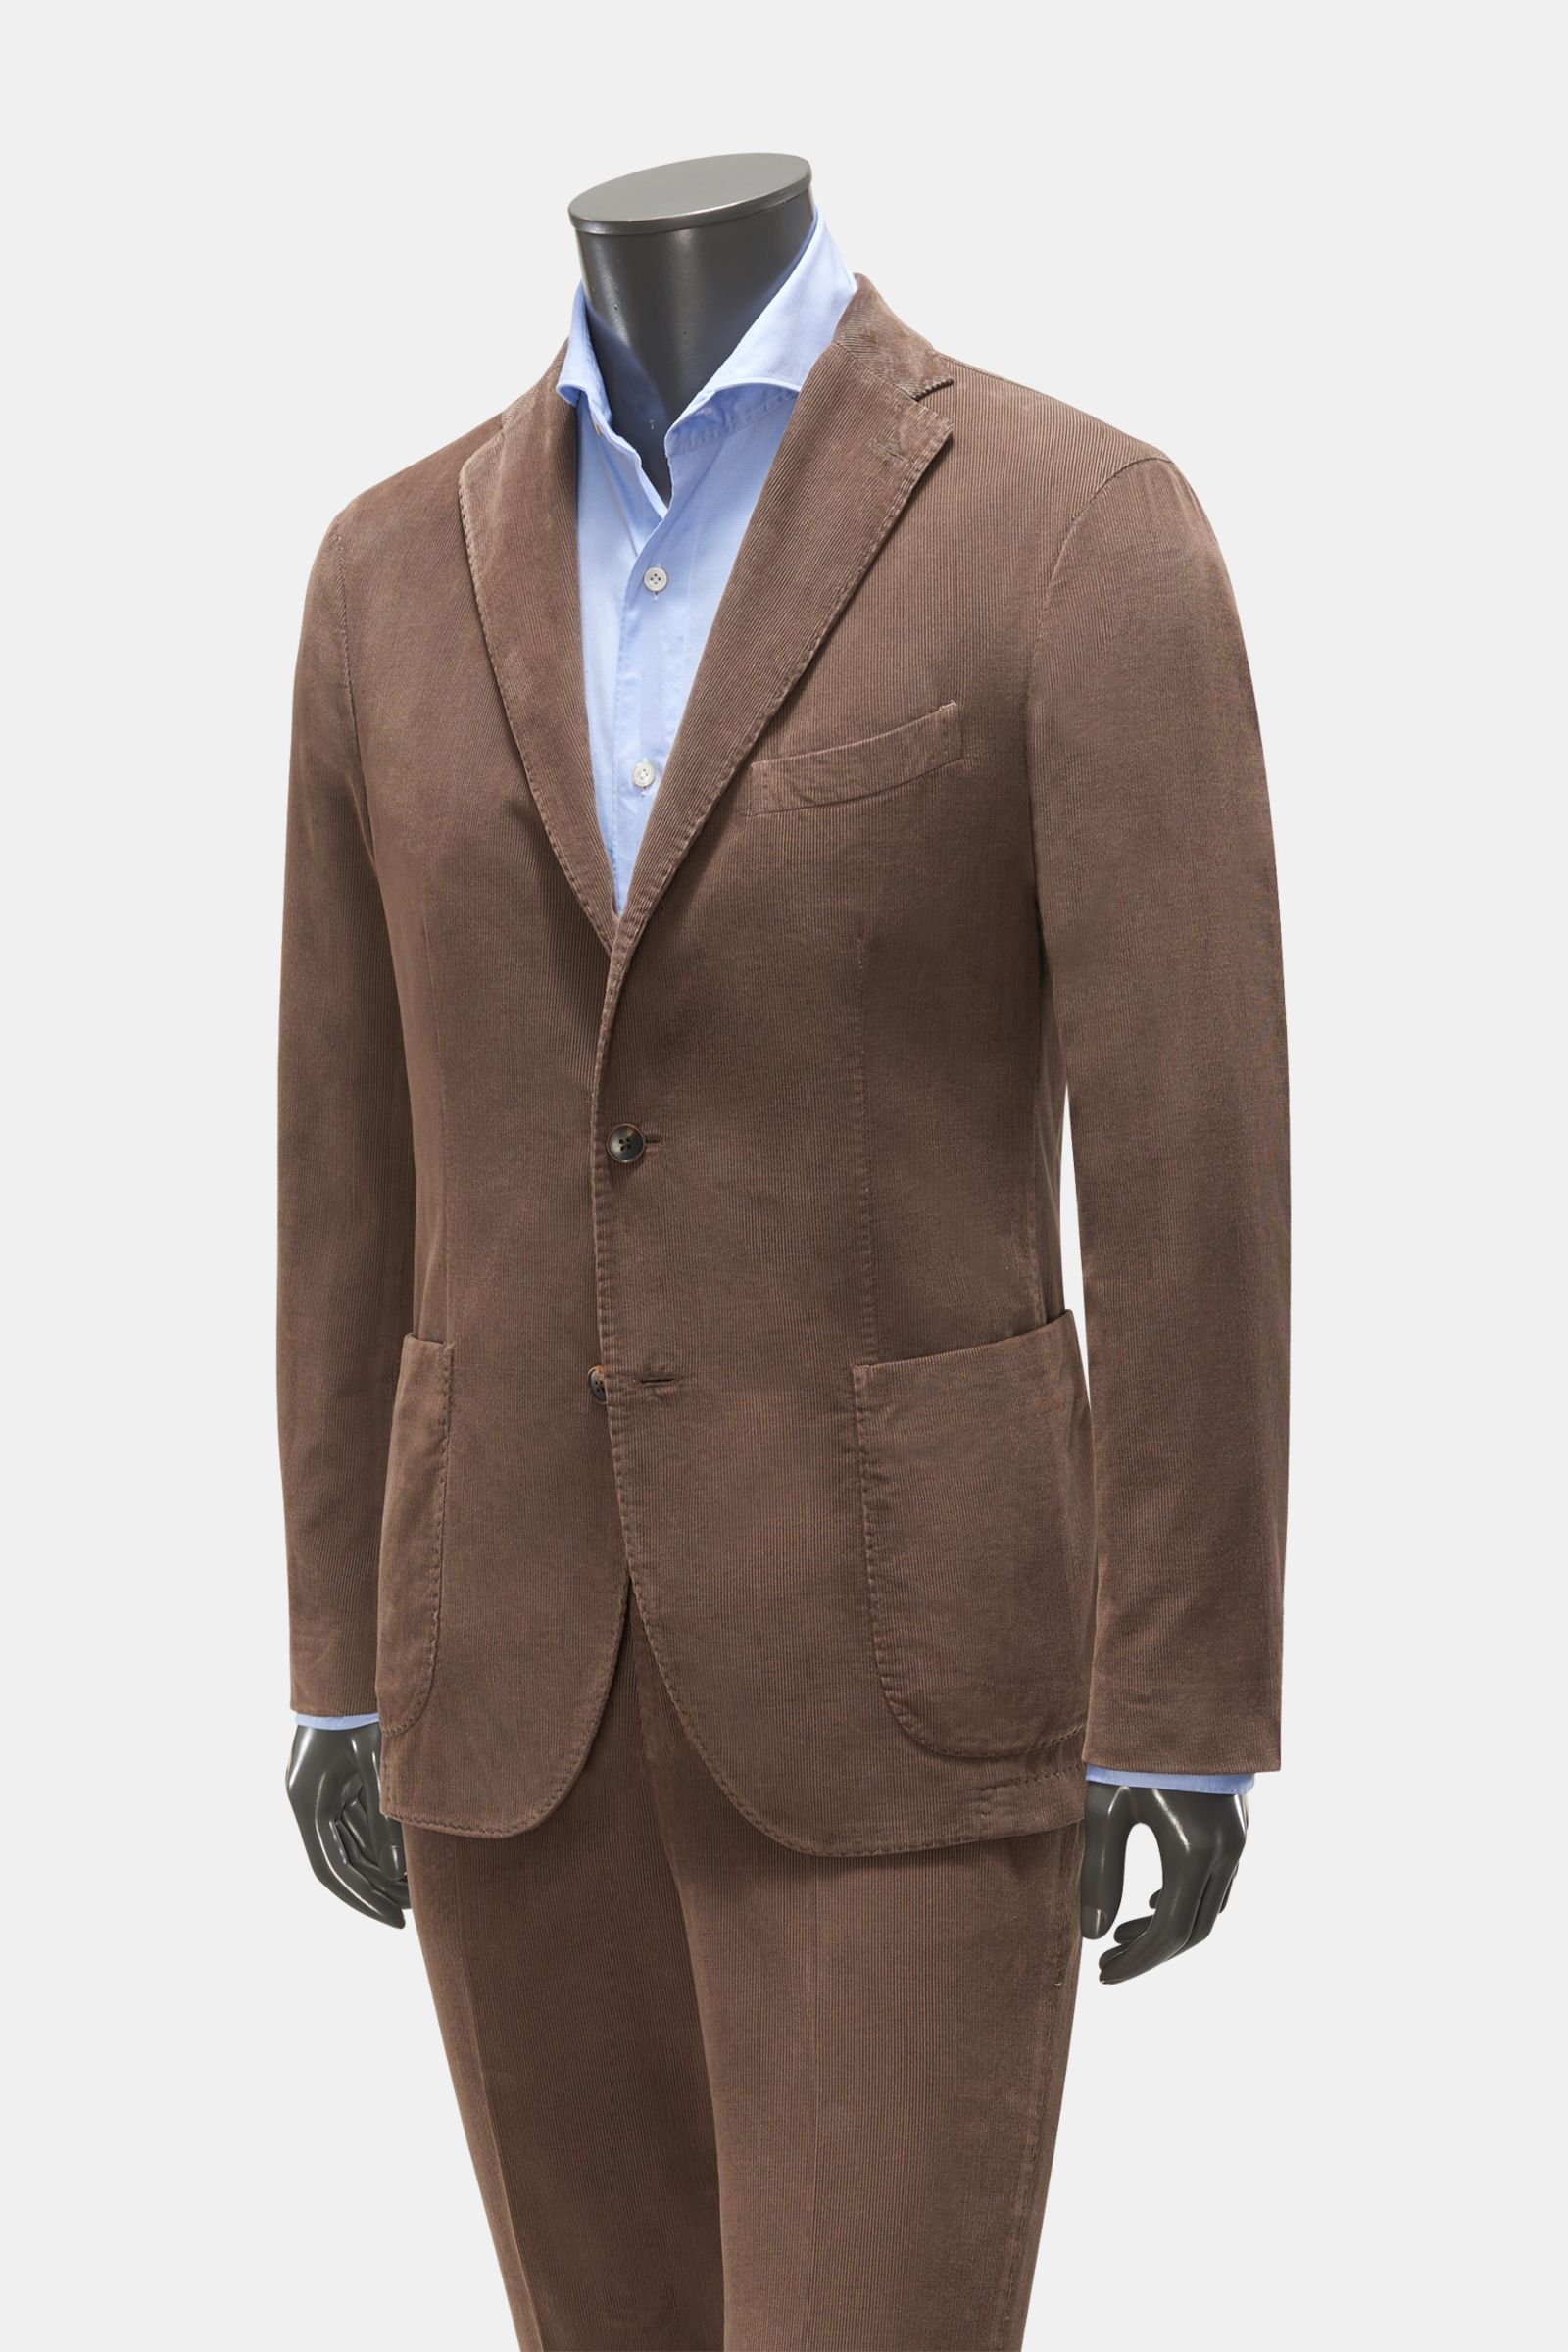 Corduroy suit grey-brown